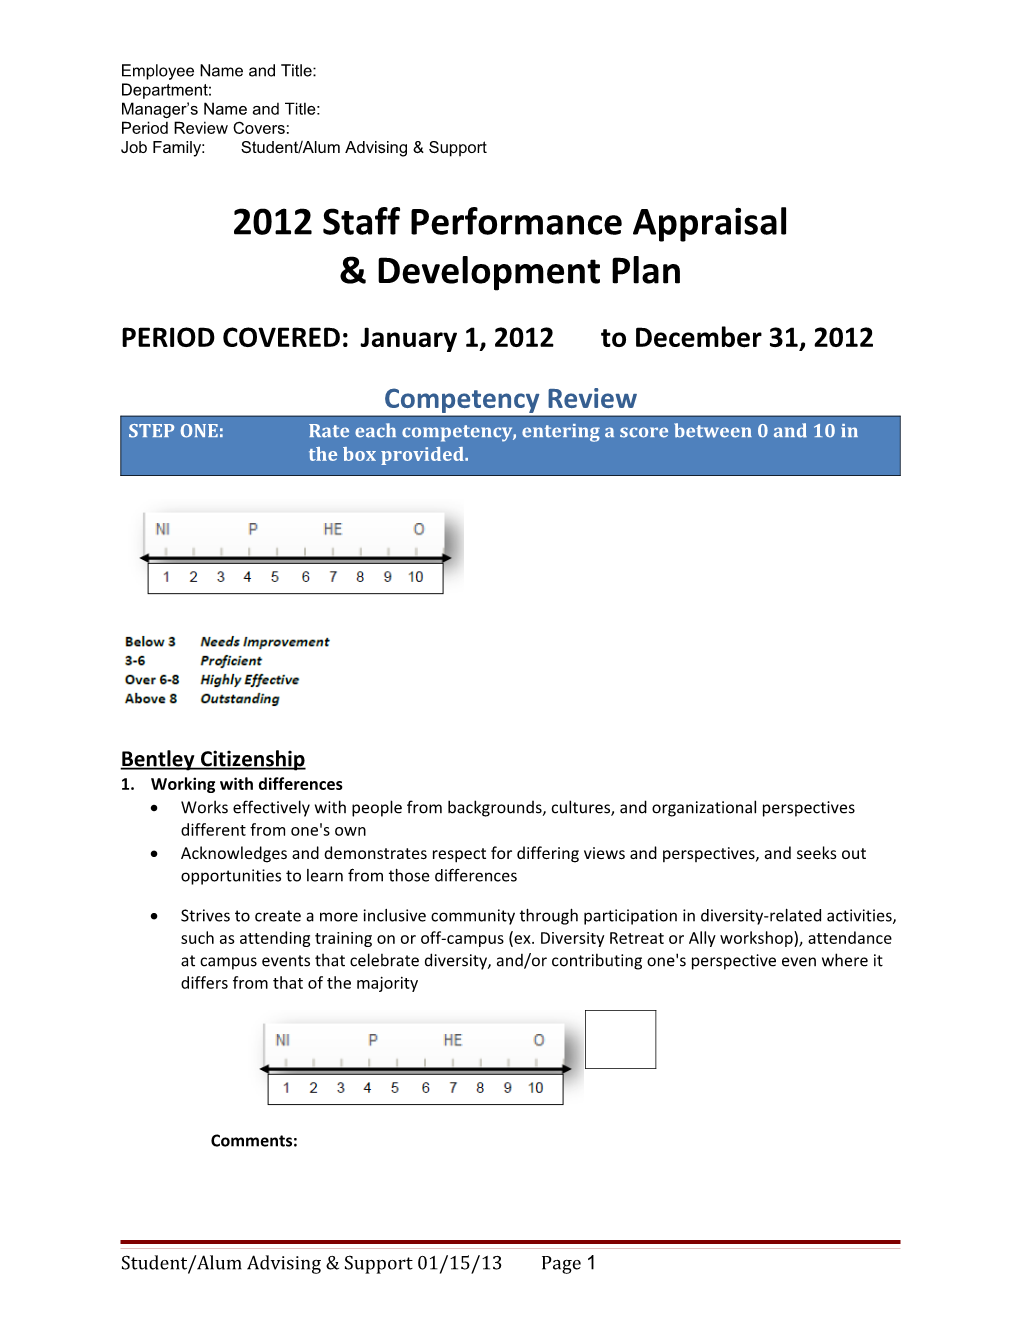 Staff Performance Appraisal and Development Plan